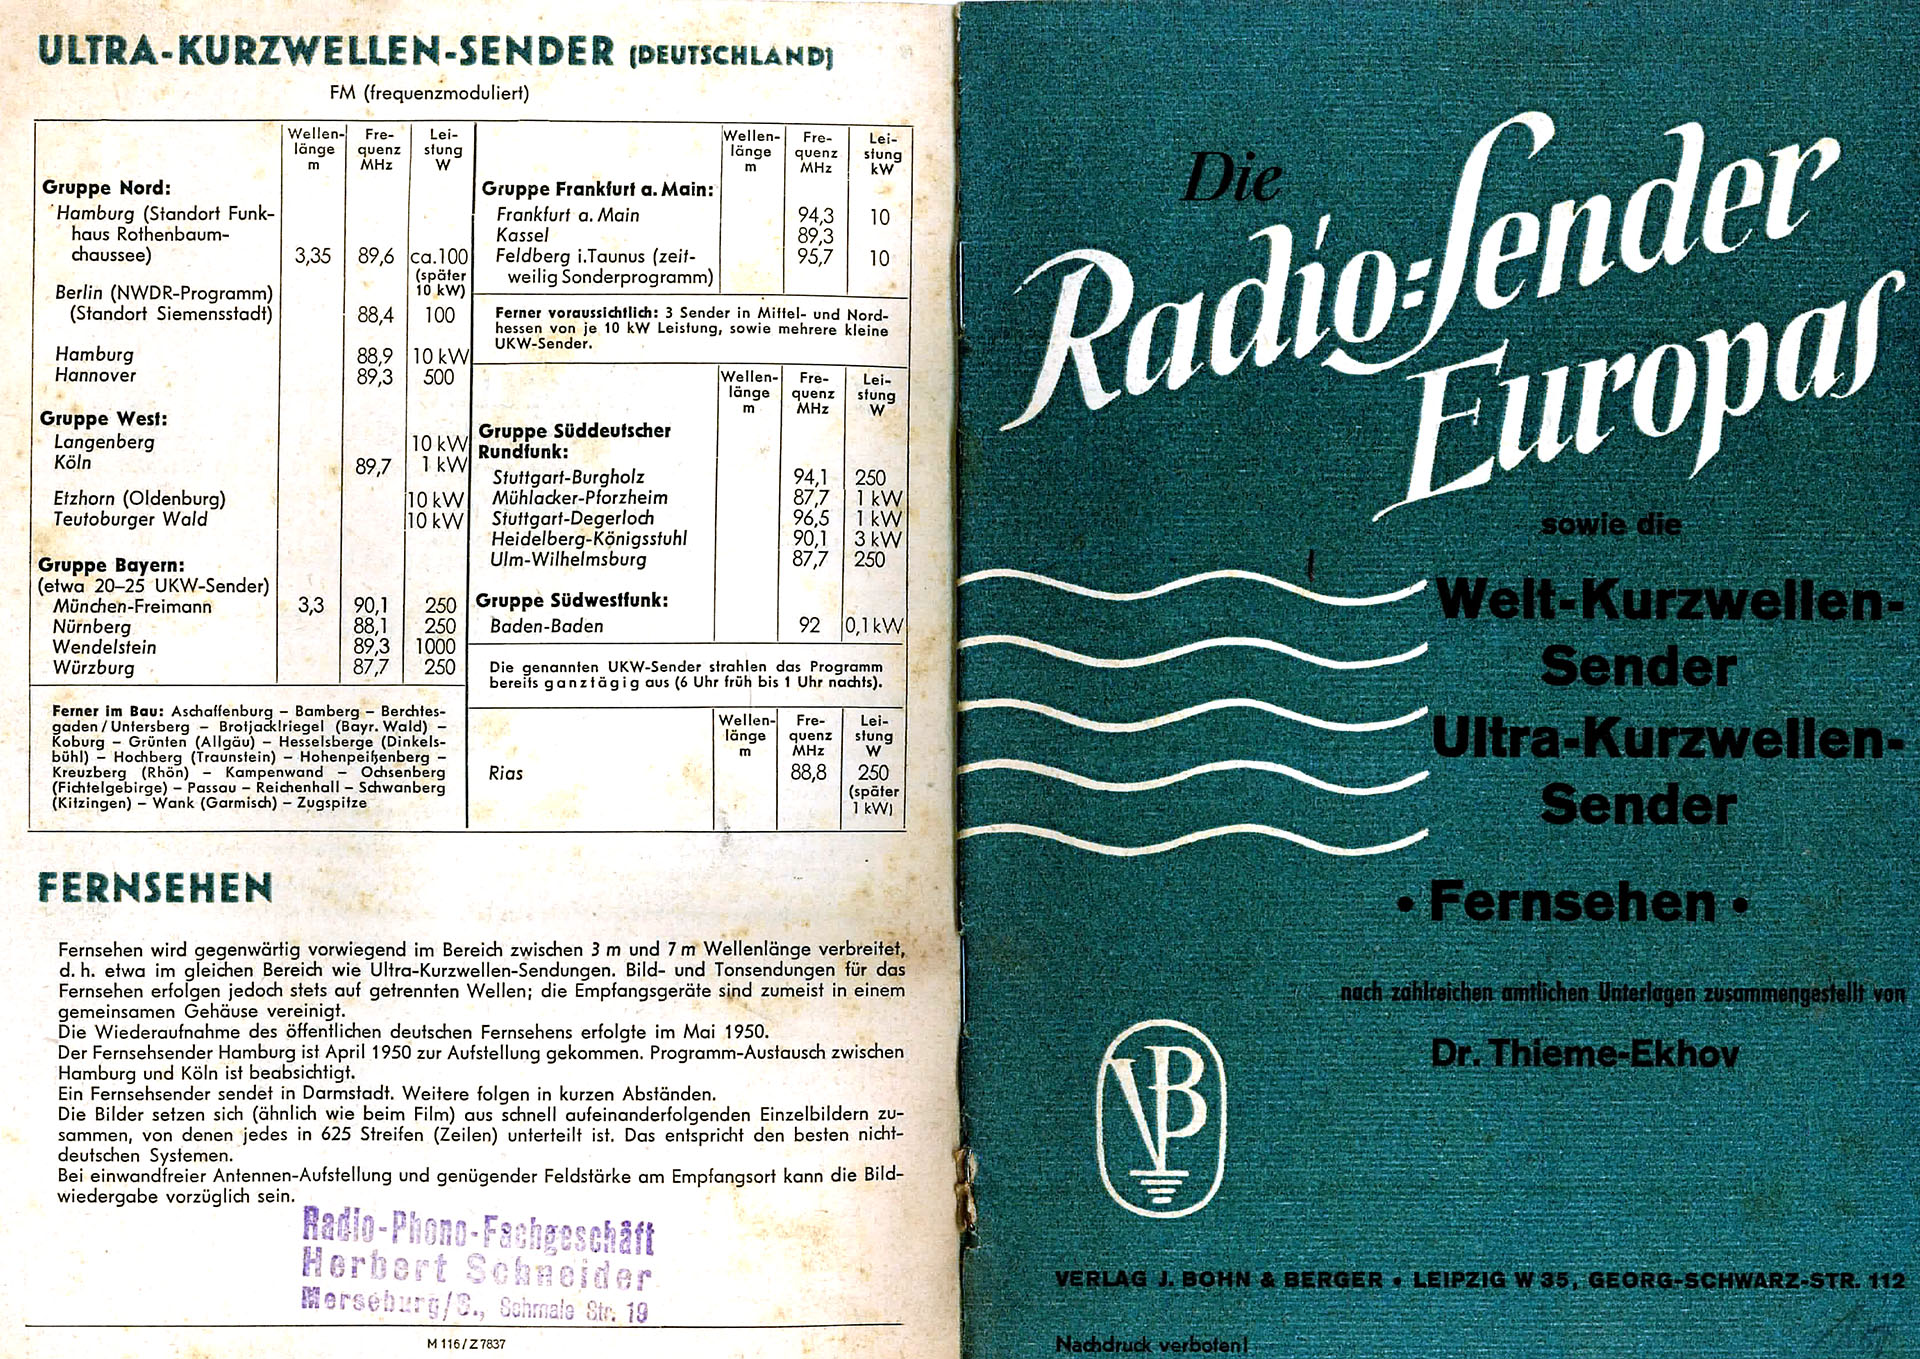 Die Radio - Sender Europas - Dr. Thieme - Ekhov